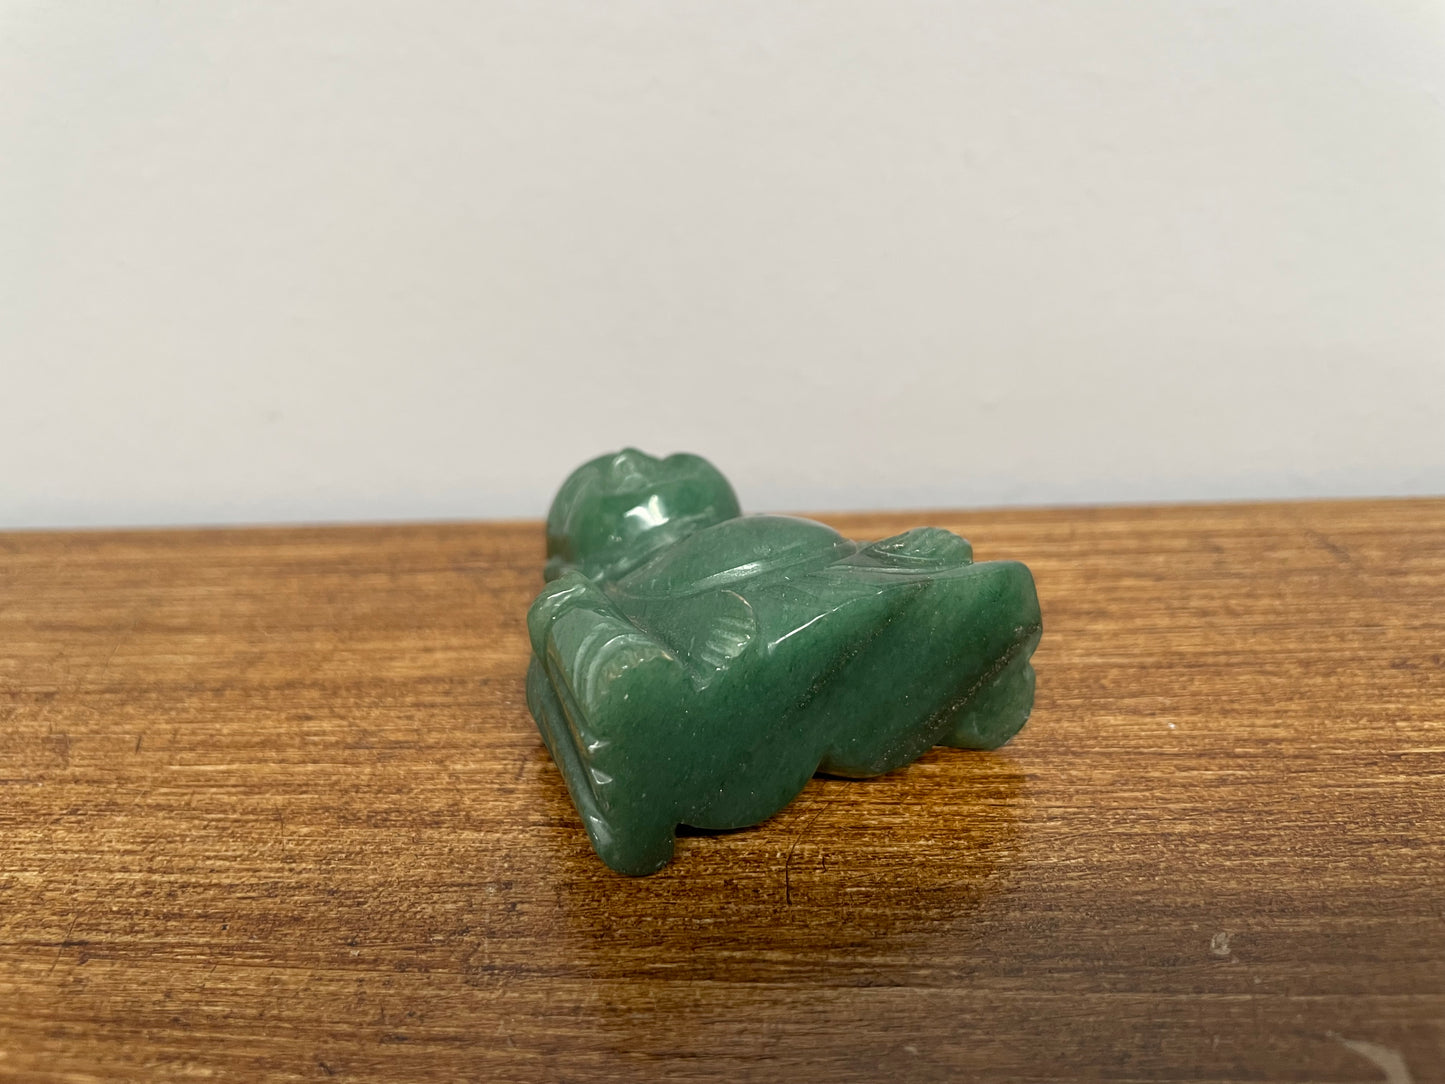 Vintage Chinese Green Jade Buddha